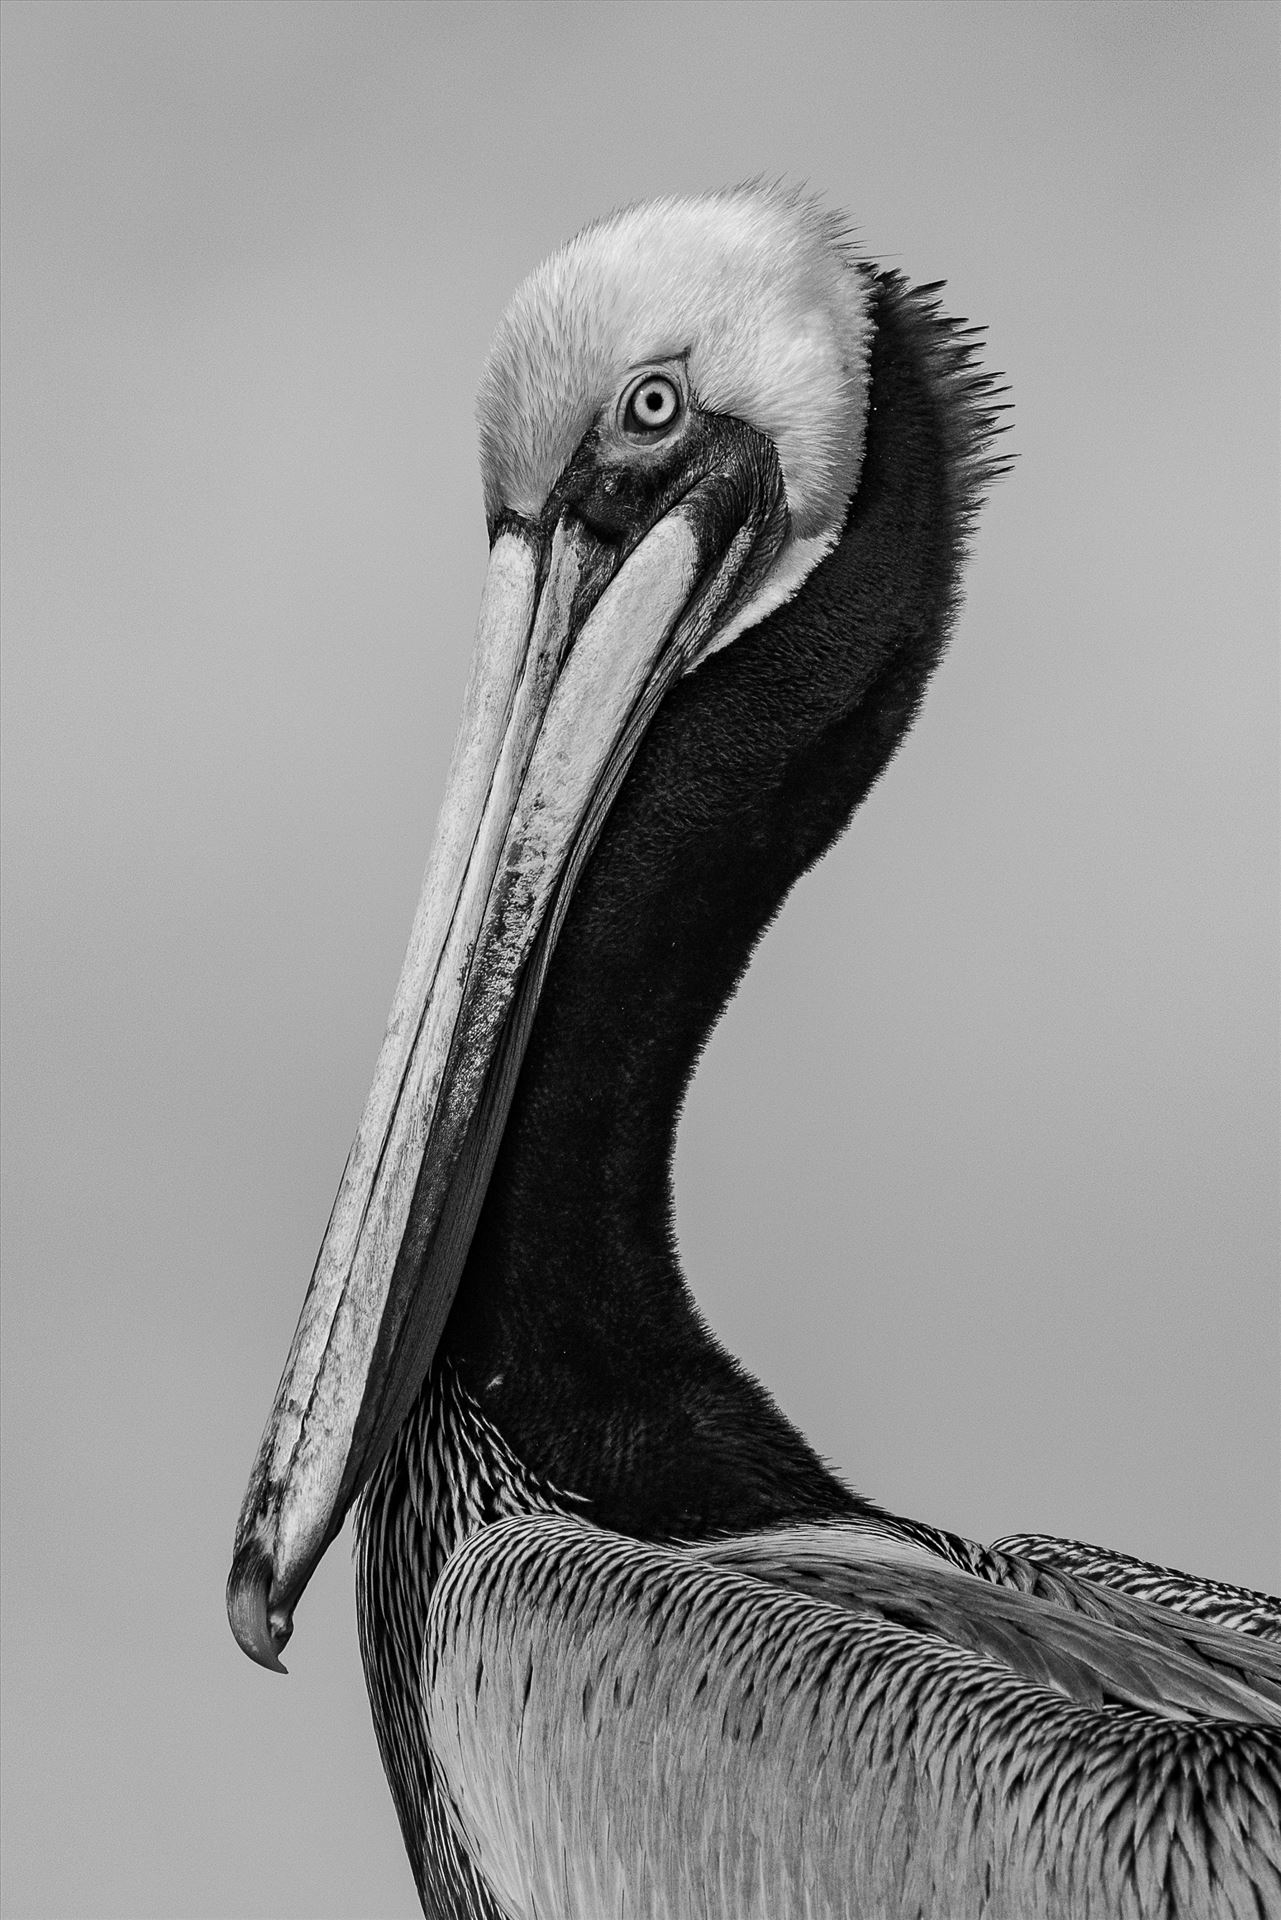 Portrait of K15, a Brown Pelican Brown Pelican in monochrome by Denise Buckley Crawford